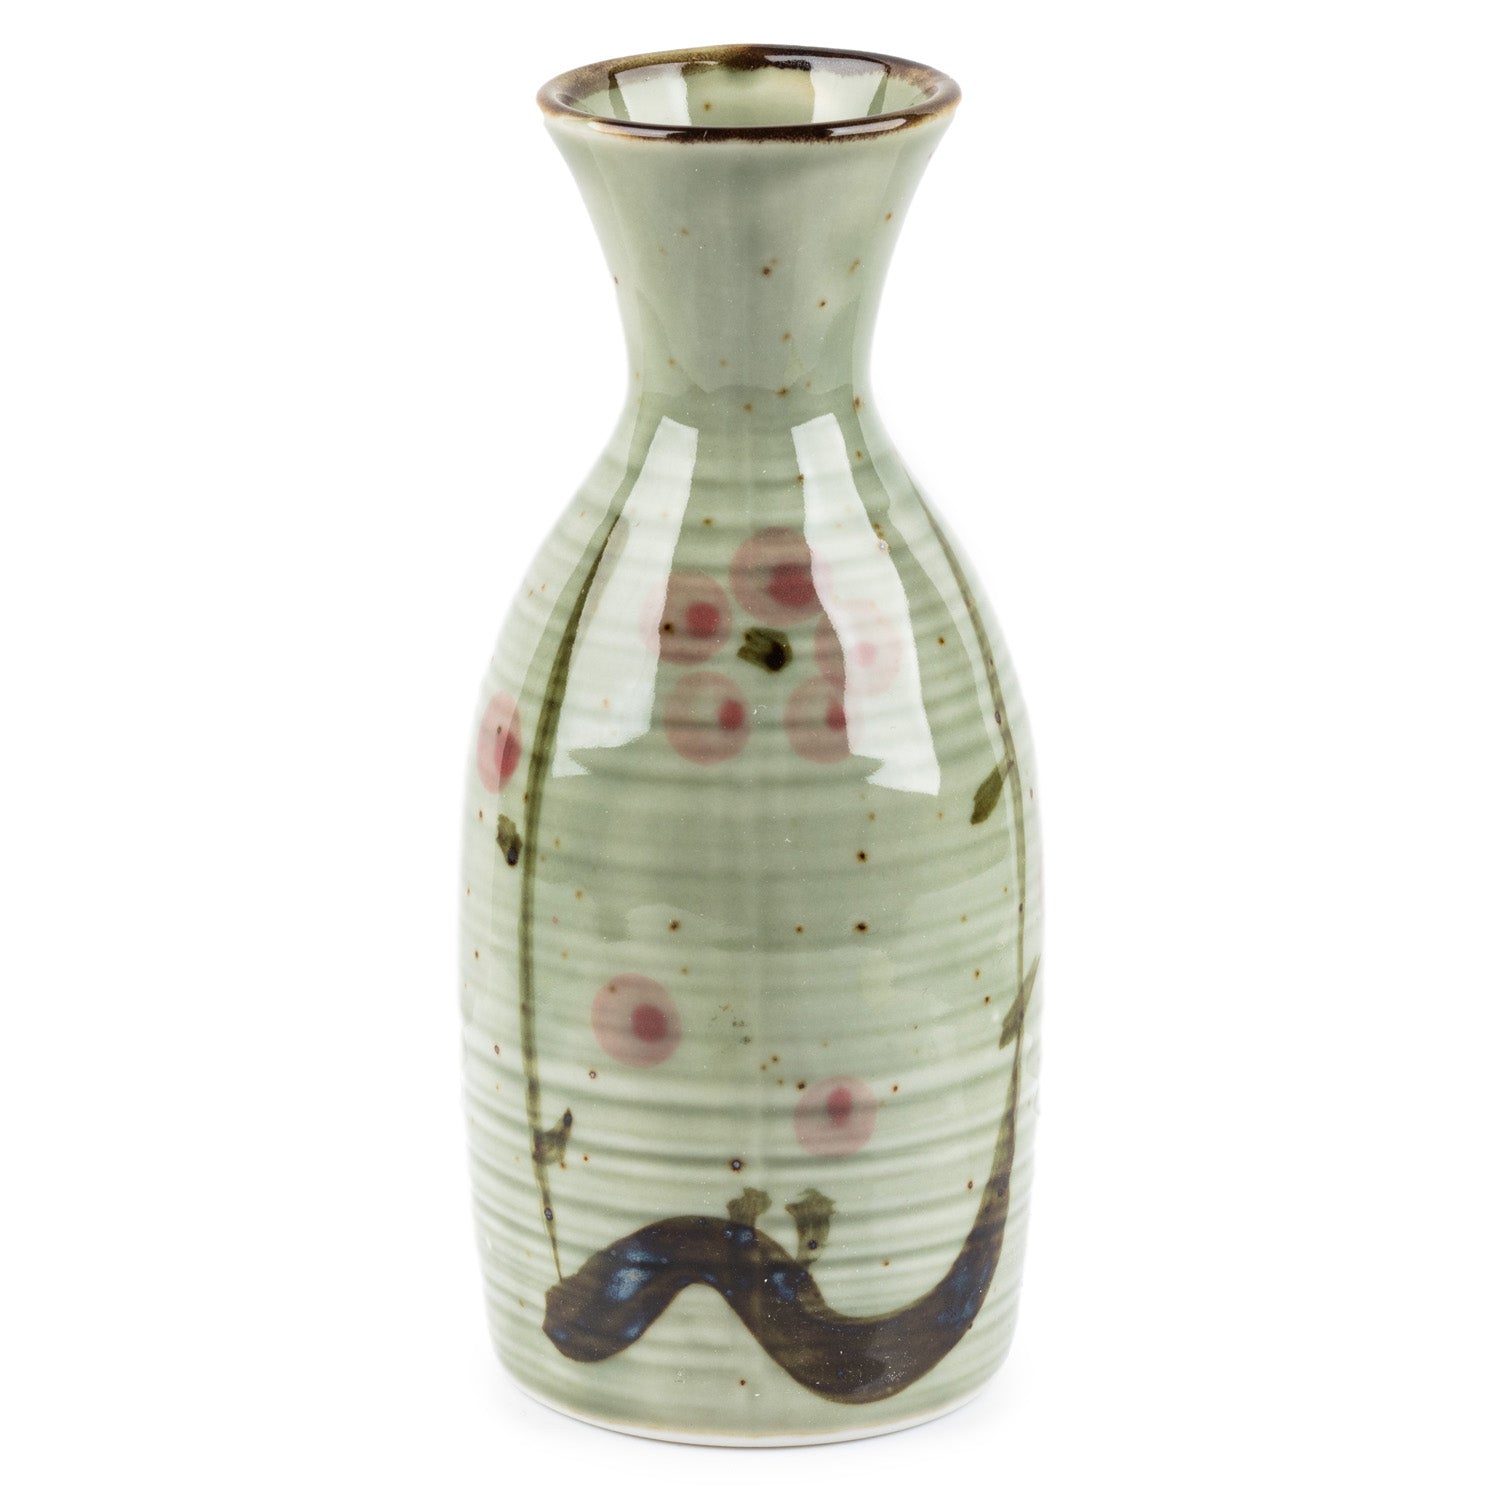 Ume Japanese Ceramic Sake Bottle